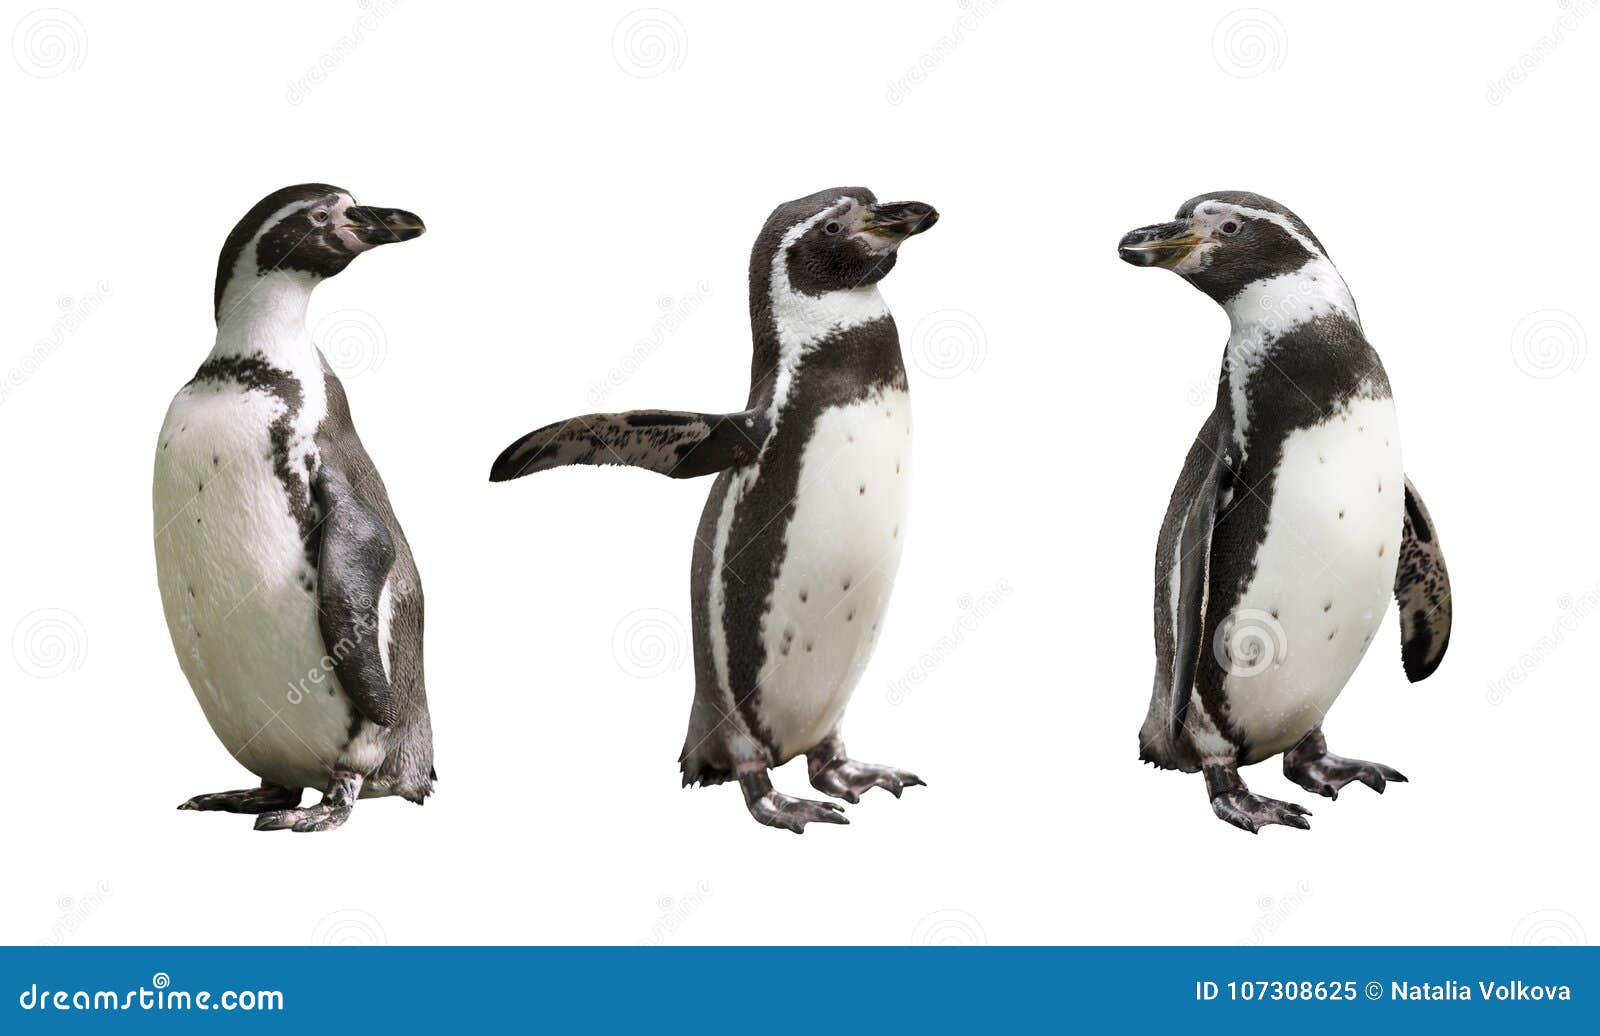 three humboldt penguins on white background